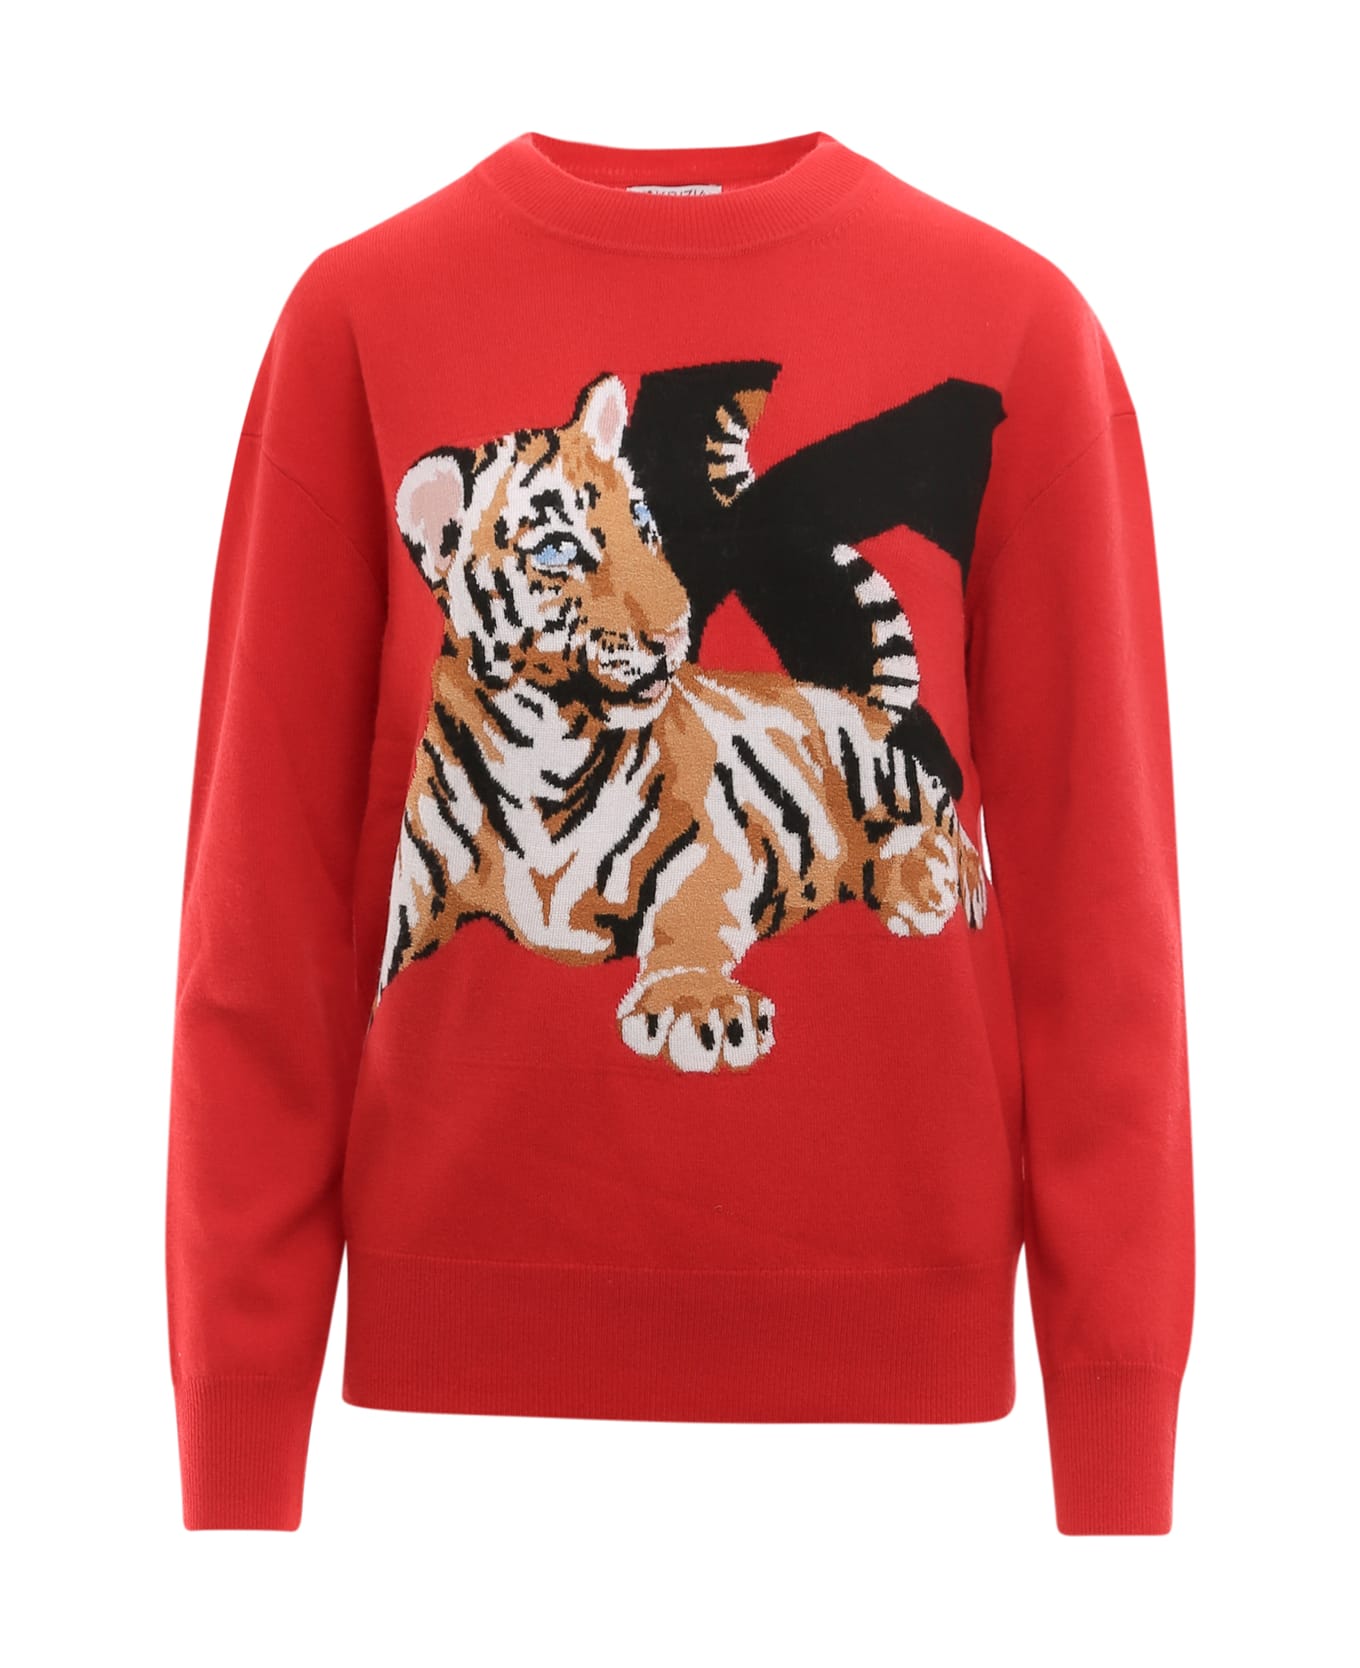 K Krizia Sweater - Red